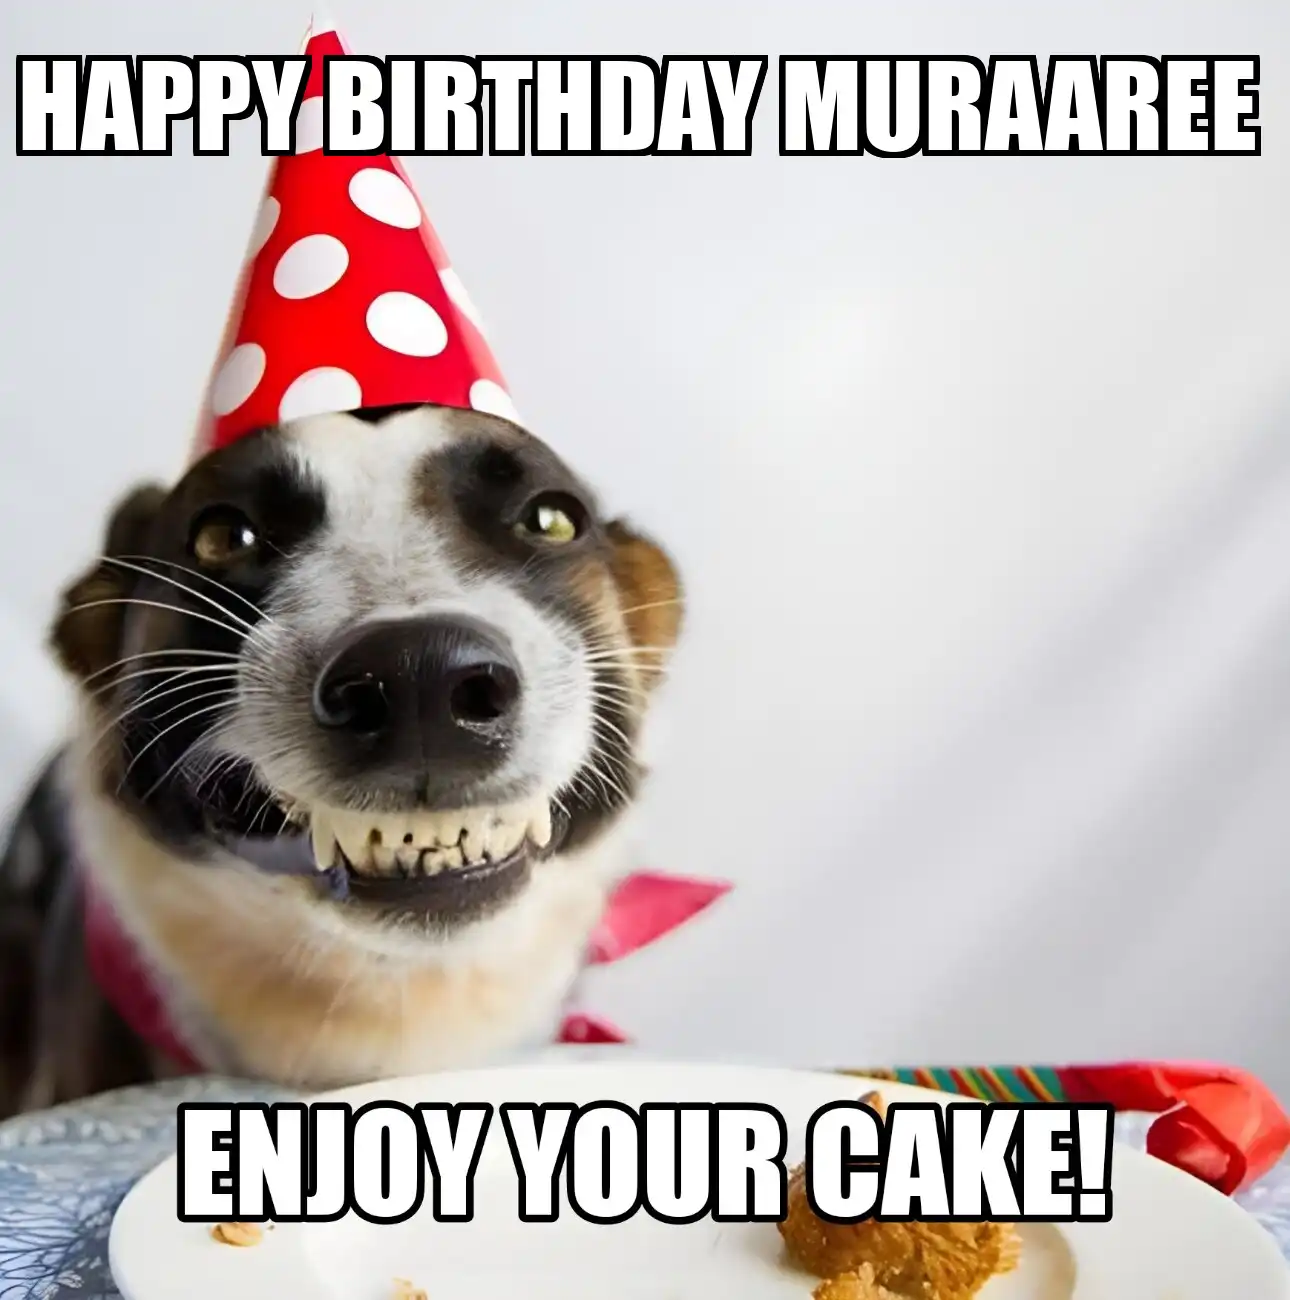 Happy Birthday Muraaree Enjoy Your Cake Dog Meme